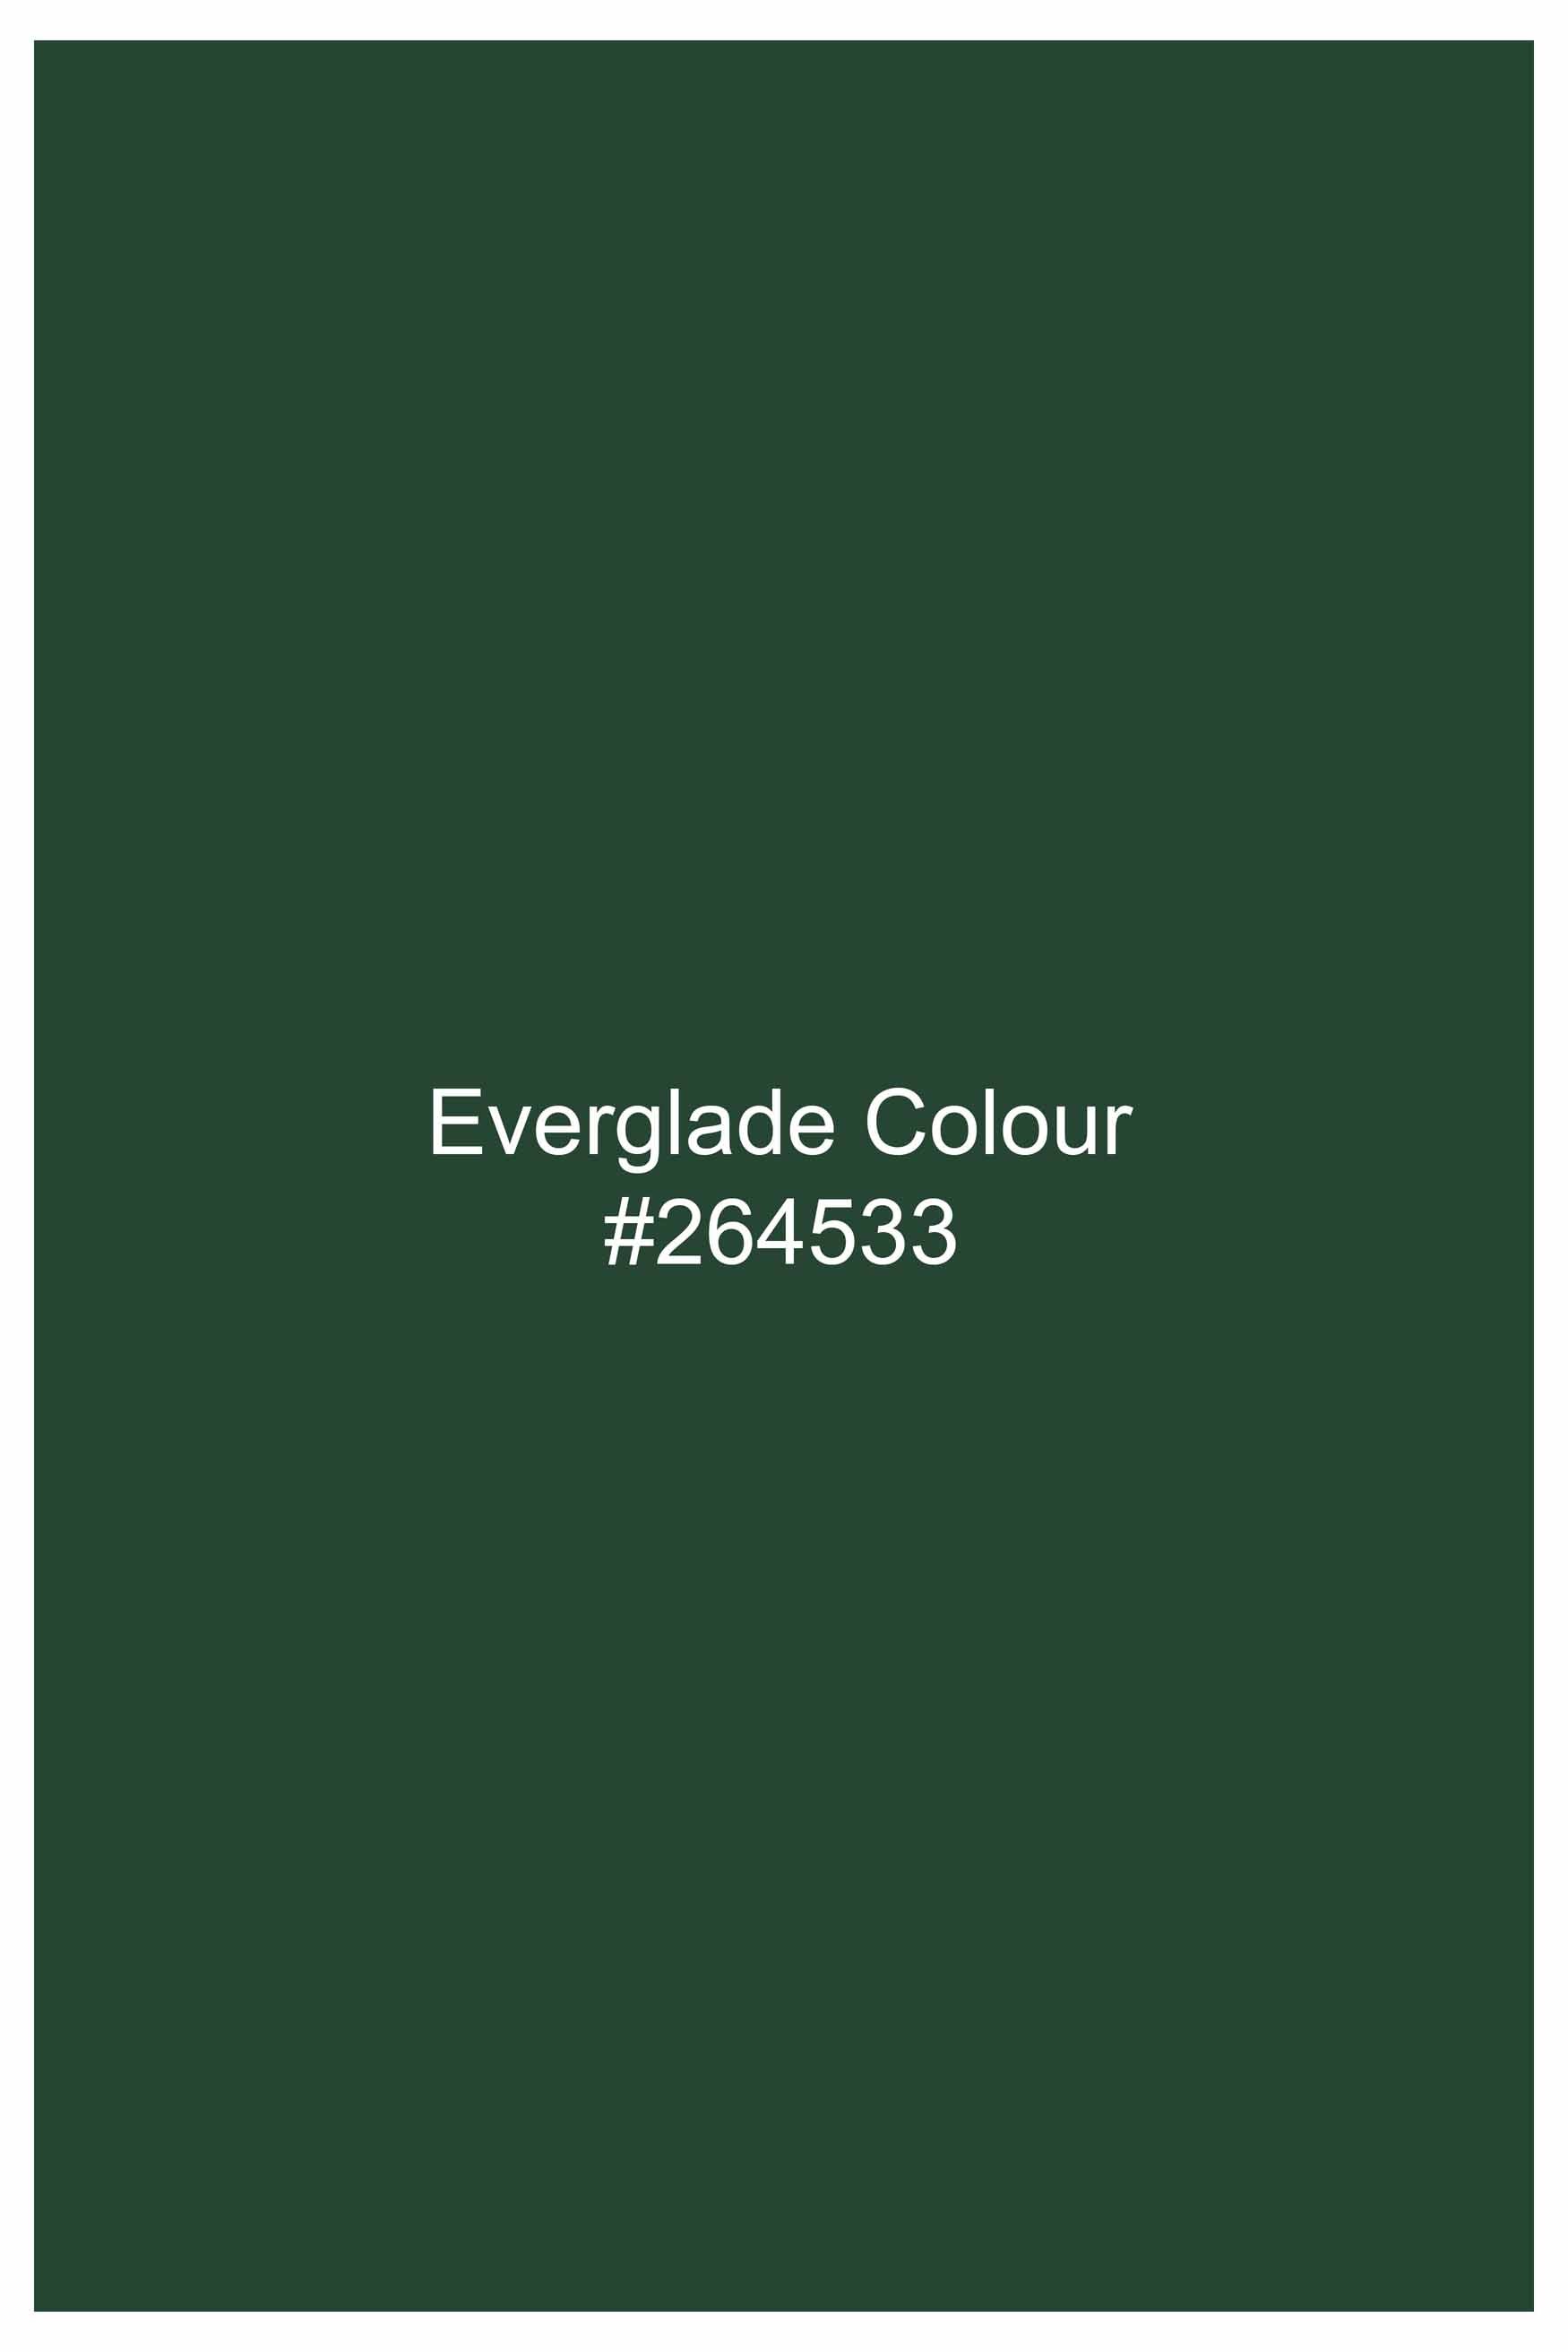 Everglade Green Subtle Sheen Super Soft Premium Cotton Shirt 11004-BLK-38, 11004-BLK-H-38, 11004-BLK-39, 11004-BLK-H-39, 11004-BLK-40, 11004-BLK-H-40, 11004-BLK-42, 11004-BLK-H-42, 11004-BLK-44, 11004-BLK-H-44, 11004-BLK-46, 11004-BLK-H-46, 11004-BLK-48, 11004-BLK-H-48, 11004-BLK-50, 11004-BLK-H-50, 11004-BLK-52, 11004-BLK-H-52